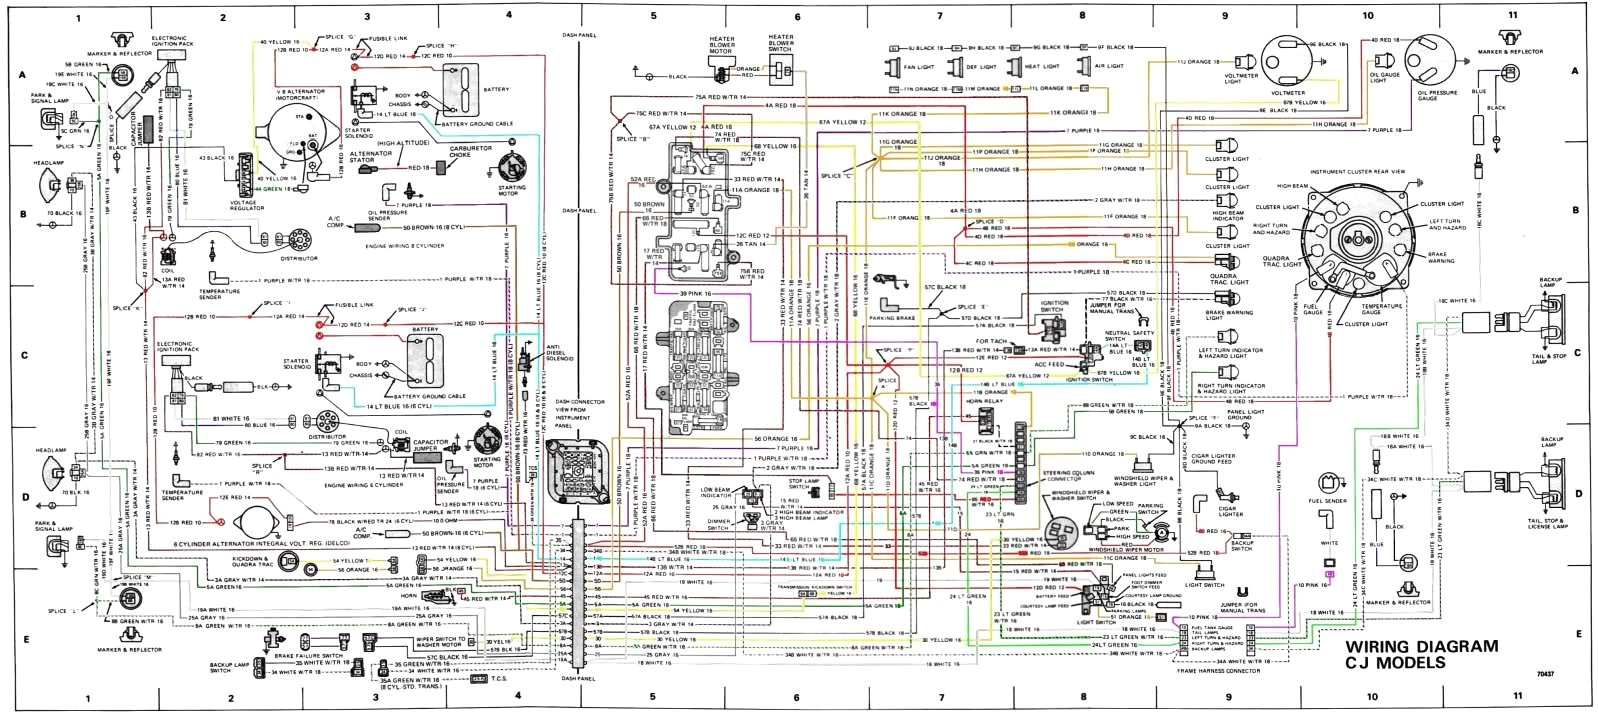 jeep cj5 electrical diagram wiring diagram sample 1978 jeep cj7 wiring harness wiring diagram operations 1972